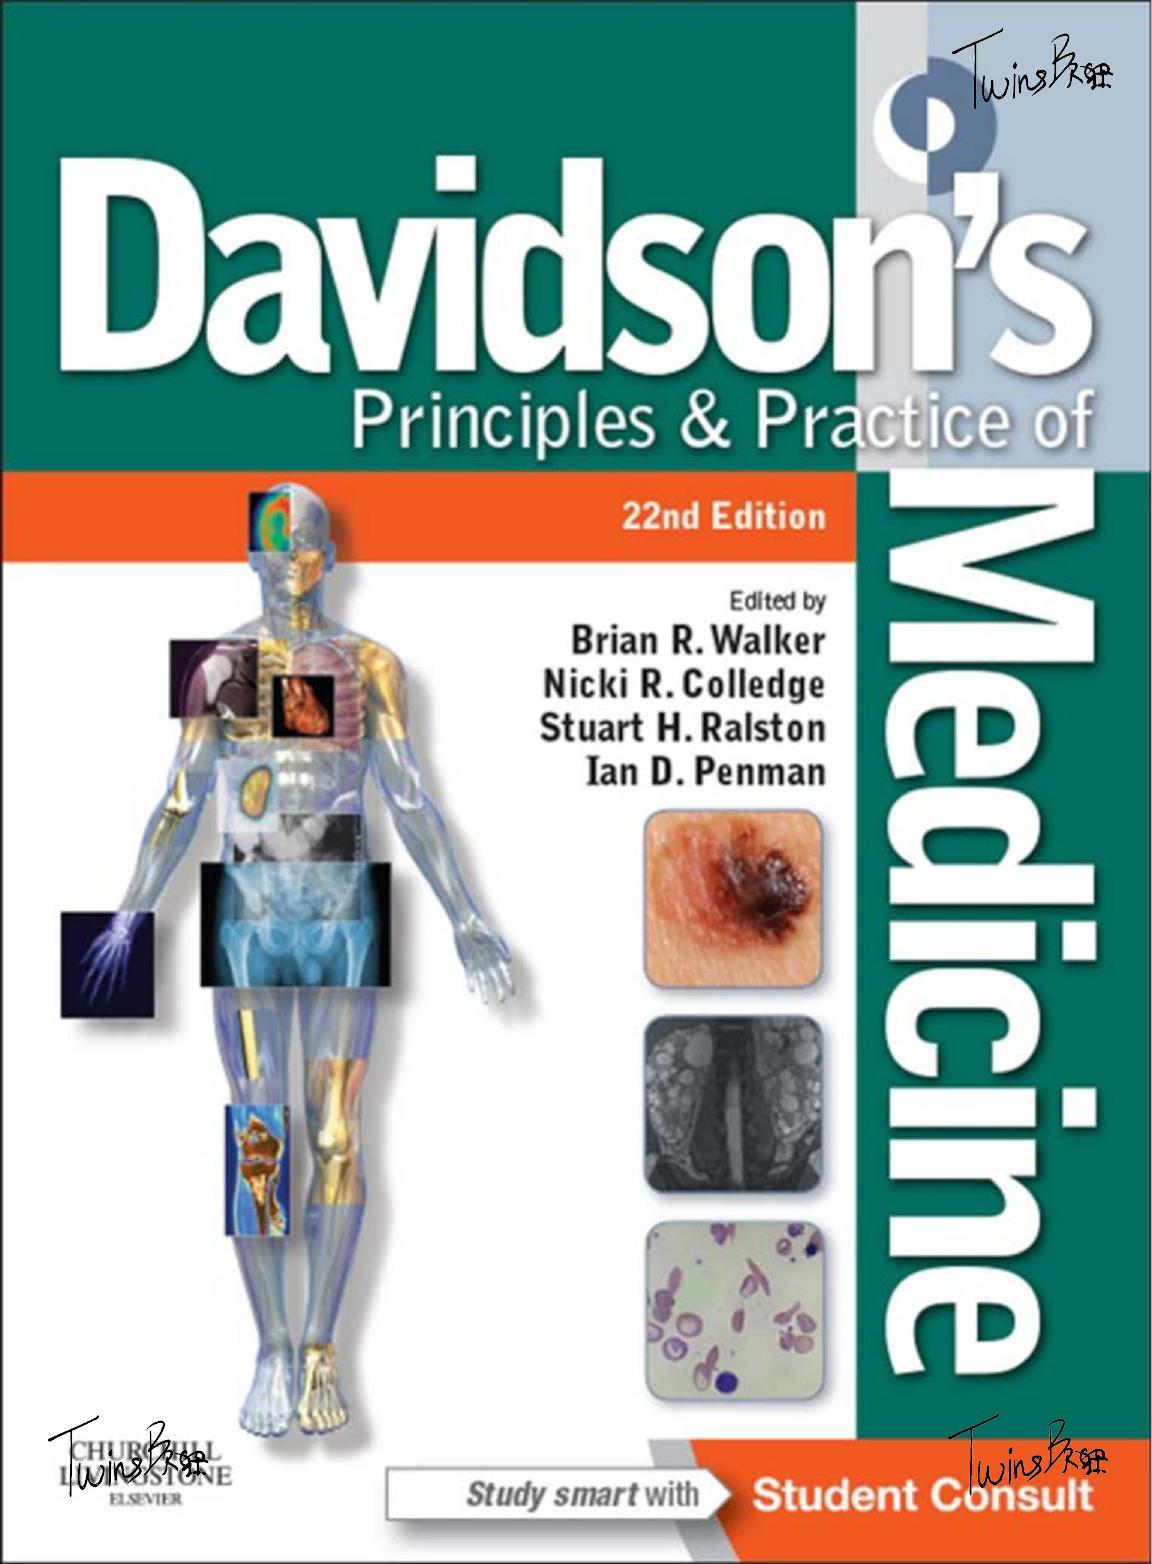 Davidsons Principles and Practice of Medicine - Wei Zhi.jpg